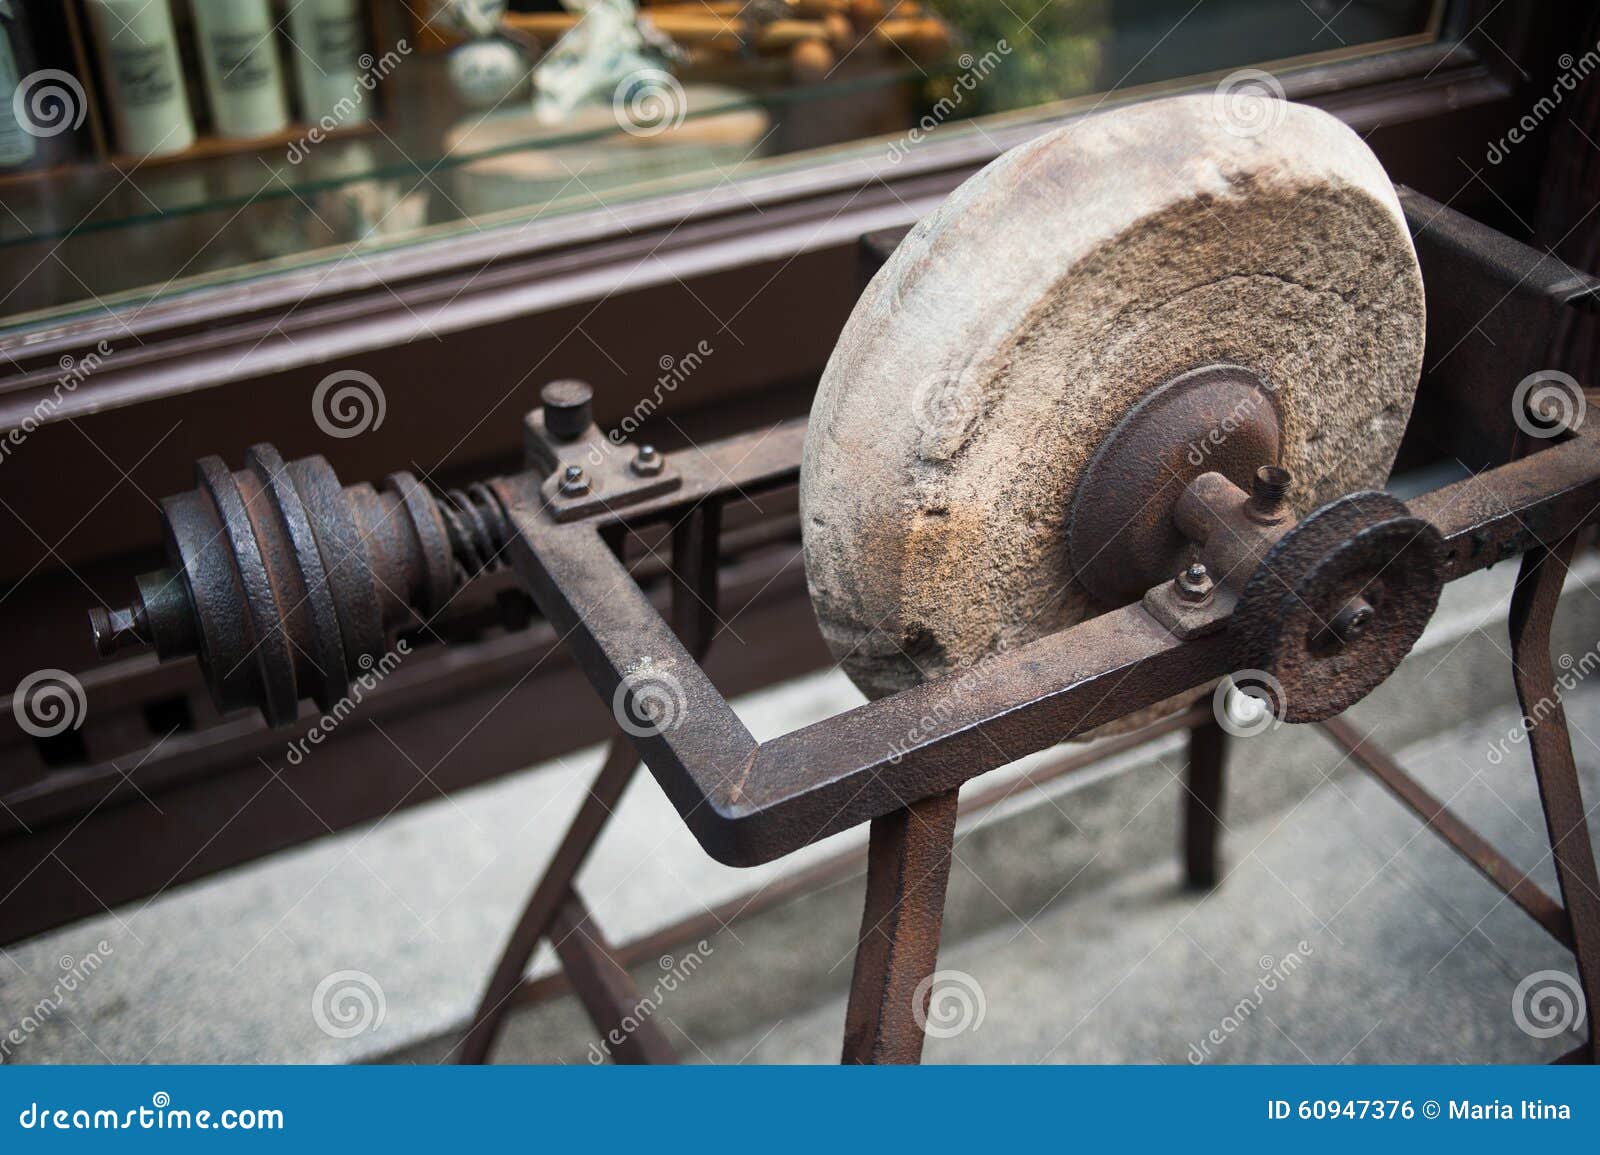 https://thumbs.dreamstime.com/z/antique-sharpening-wheel-closeup-otdoors-60947376.jpg